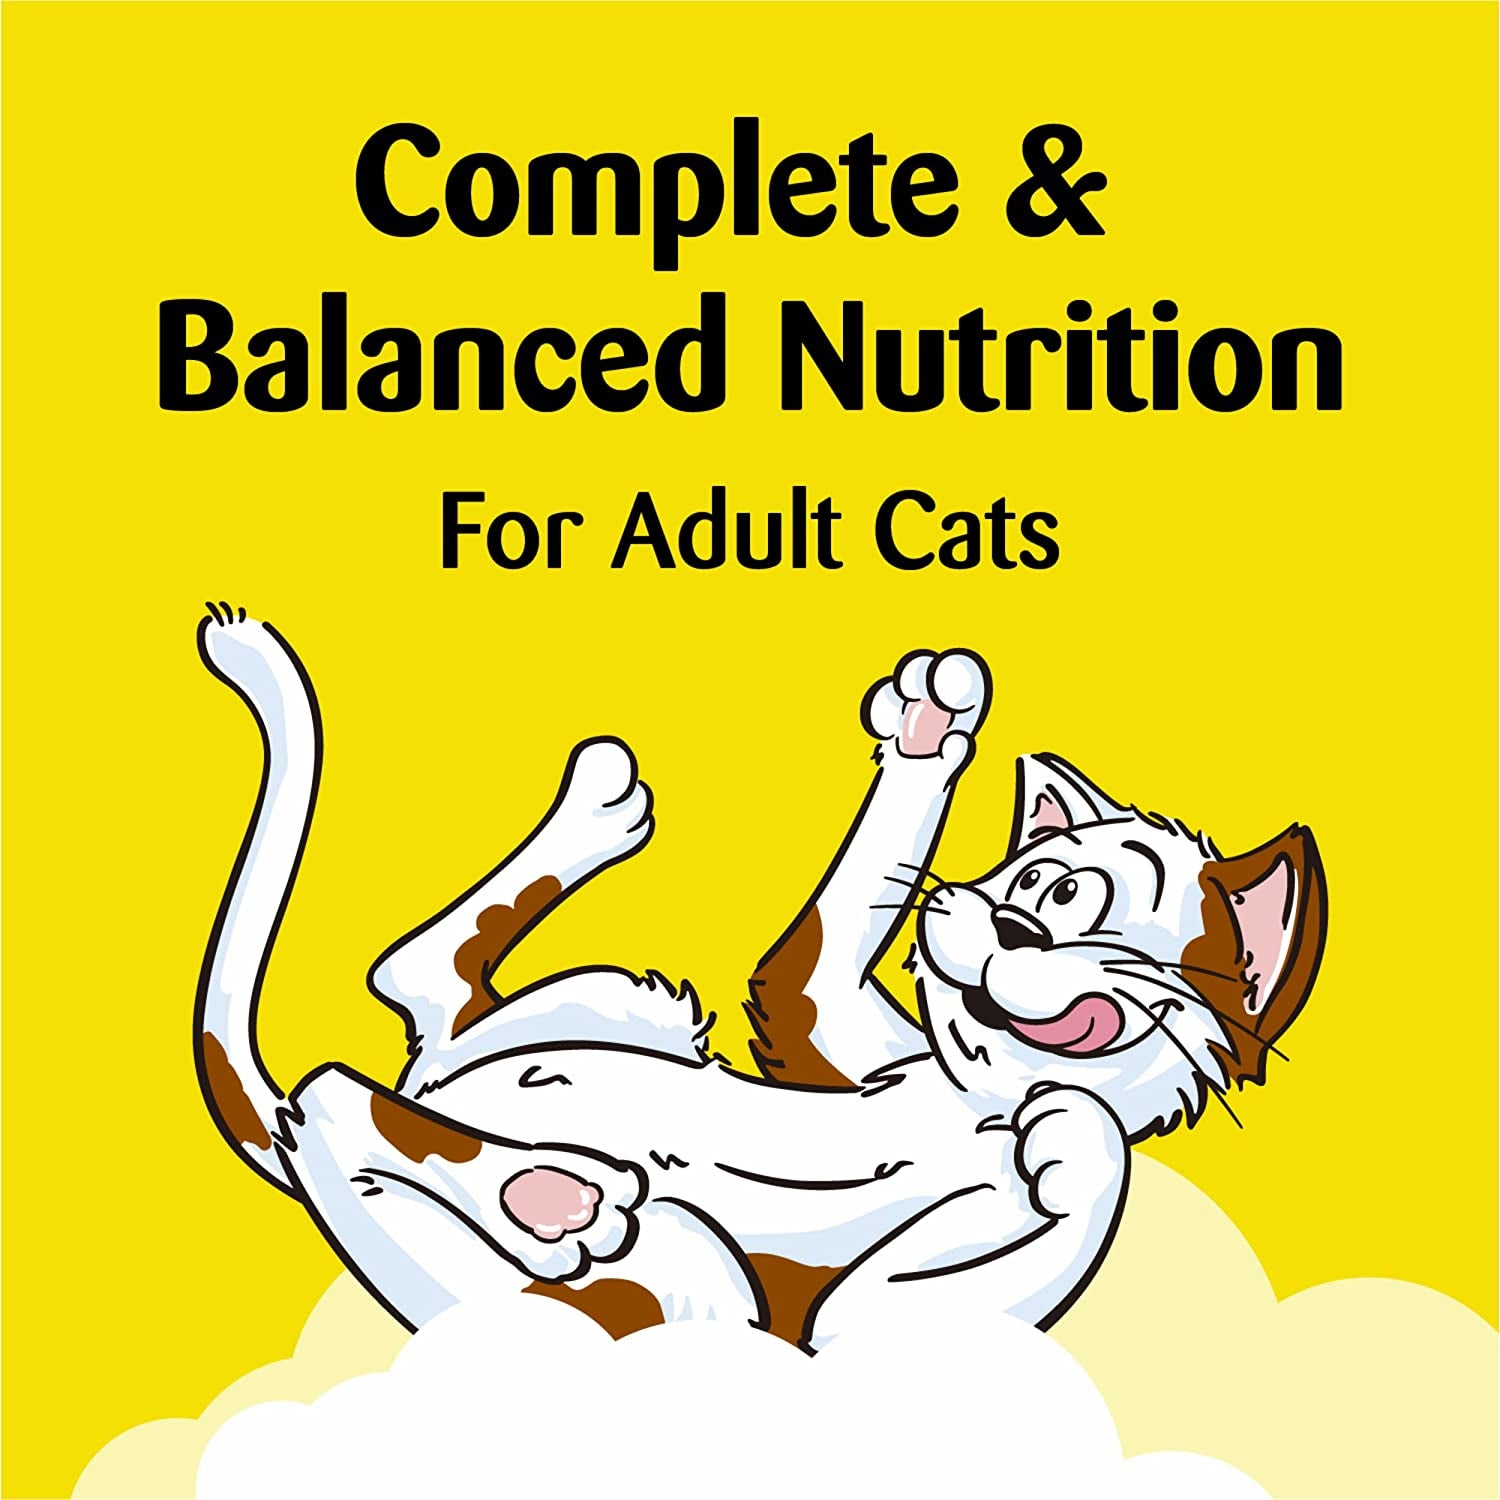 MIXUPS Crunchy and Soft Cat Treats Catnip Fever Flavor, 16 Oz. Tub